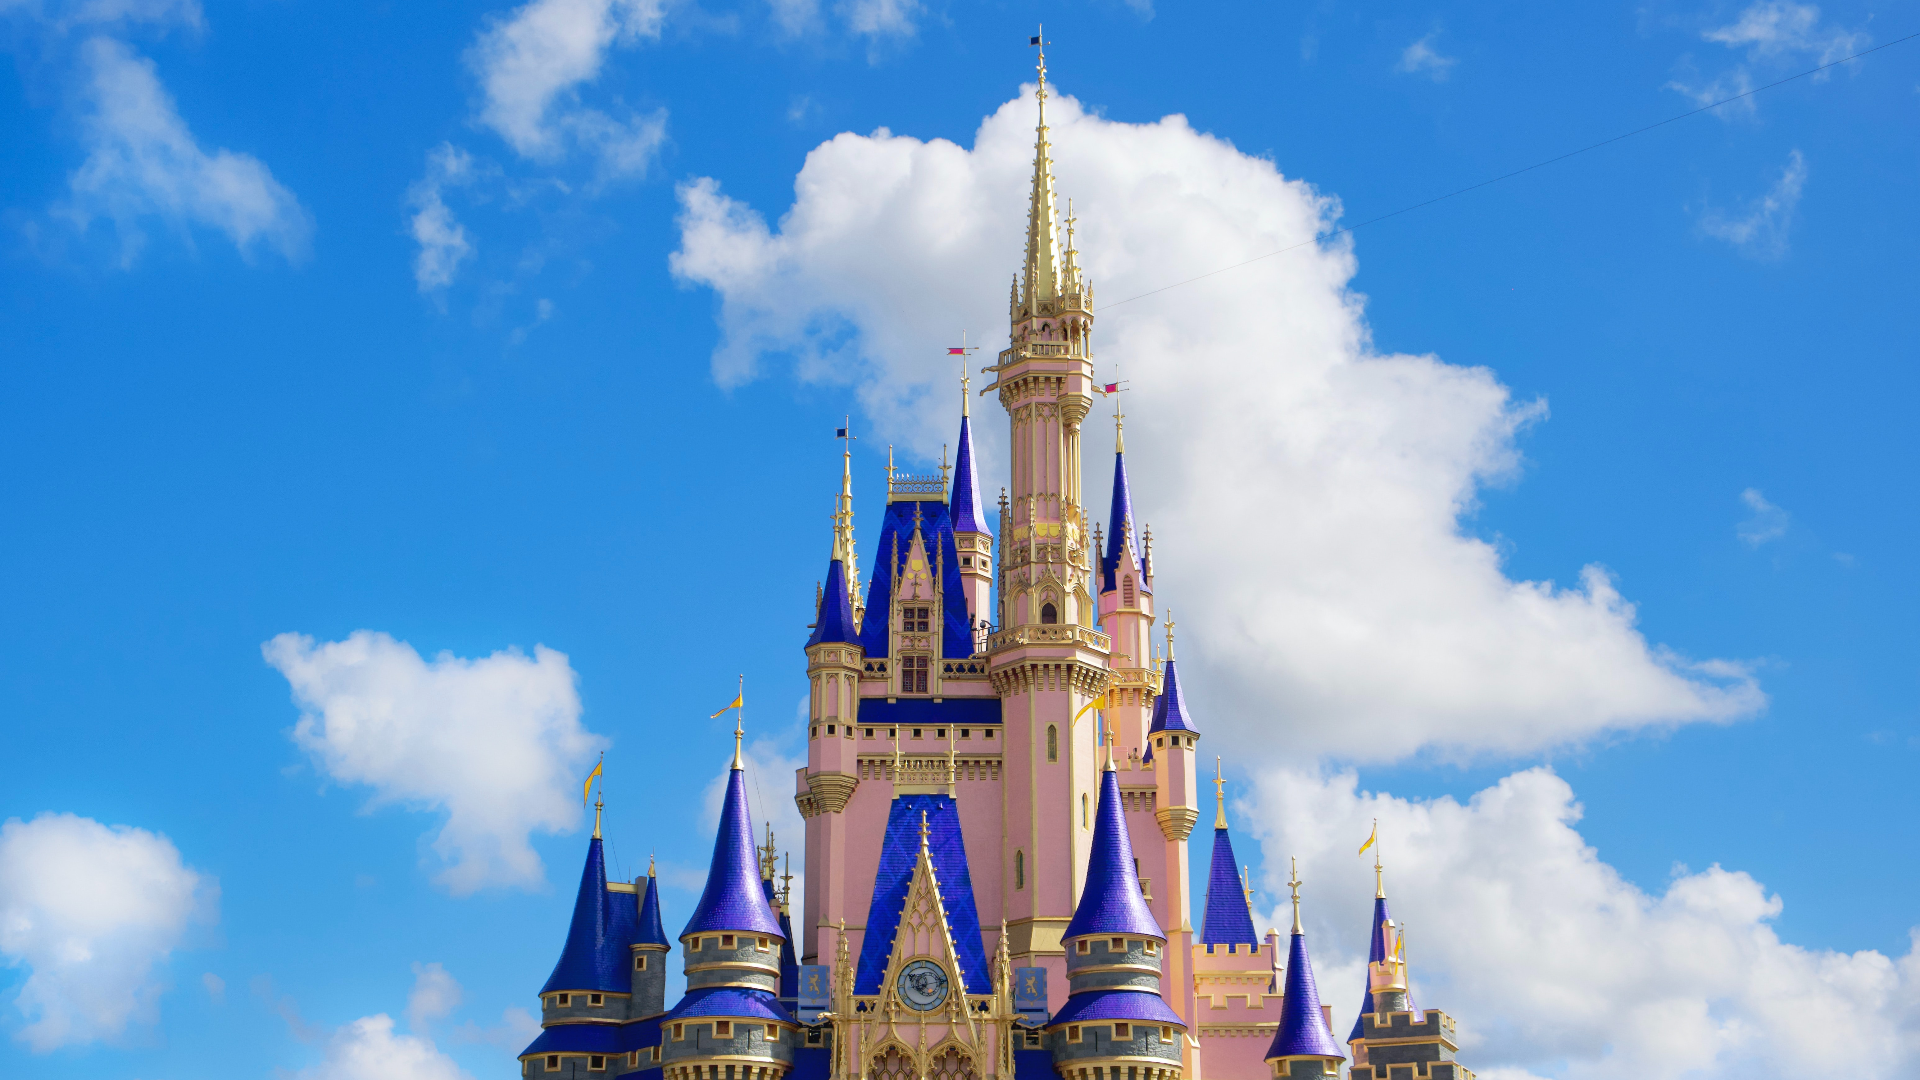 Architecture Clouds Sky Castle Building Theme Parks Tower Disney Walt Disney USA Walt Disney World R 1920x1080